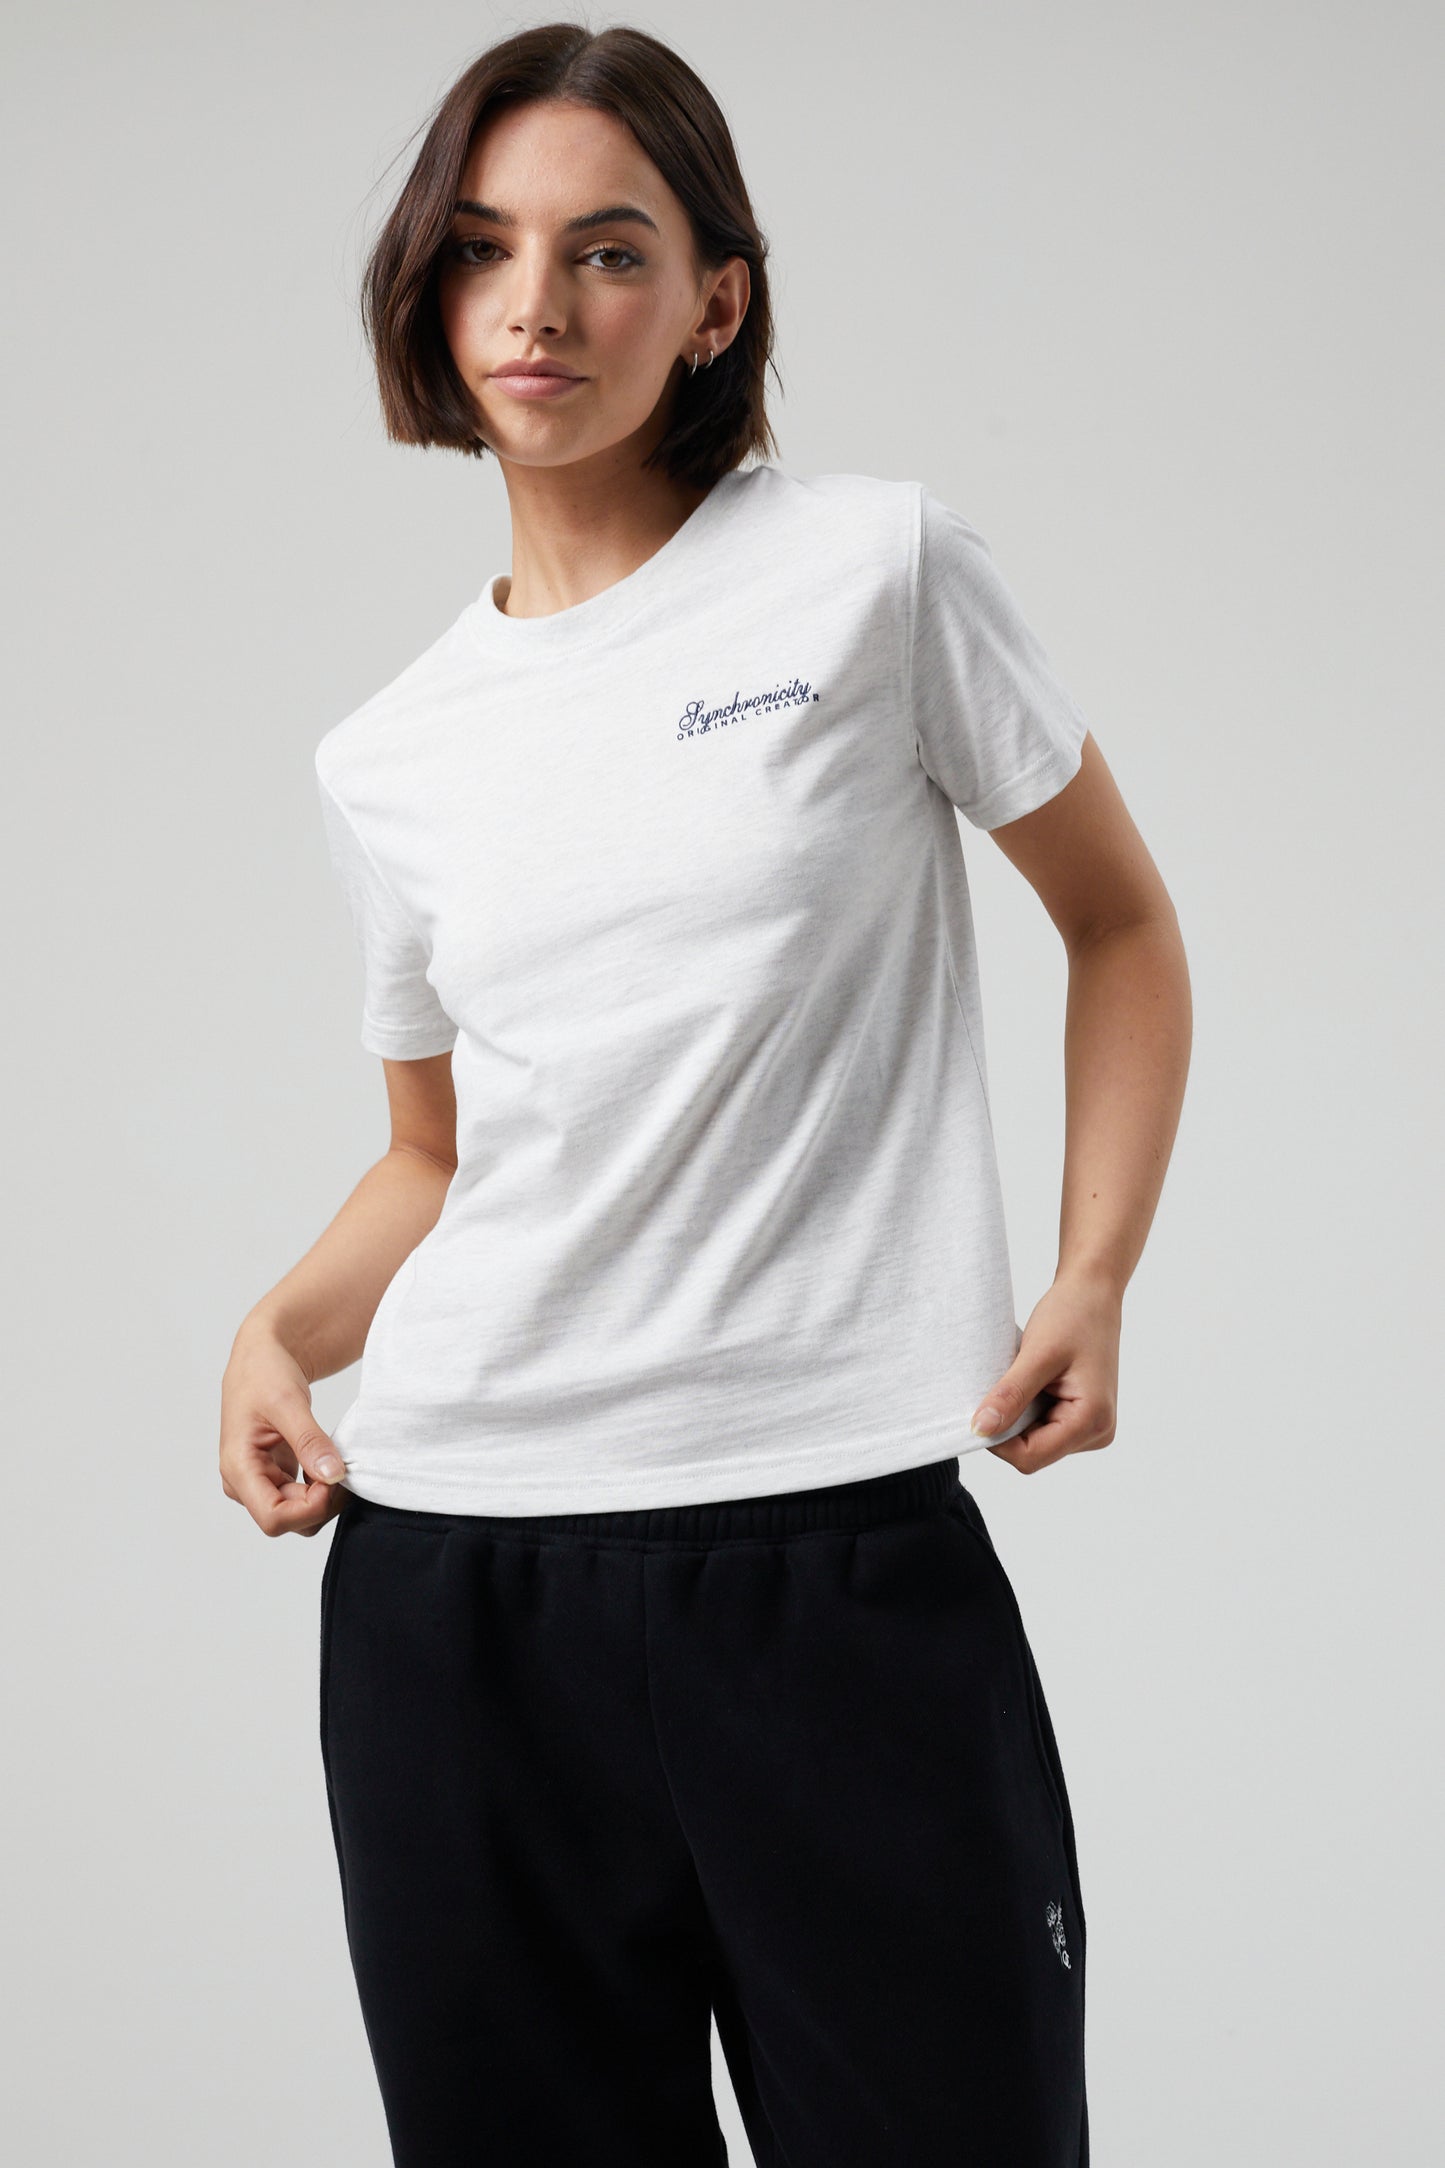 Synchronicity T-shirt - White Marl